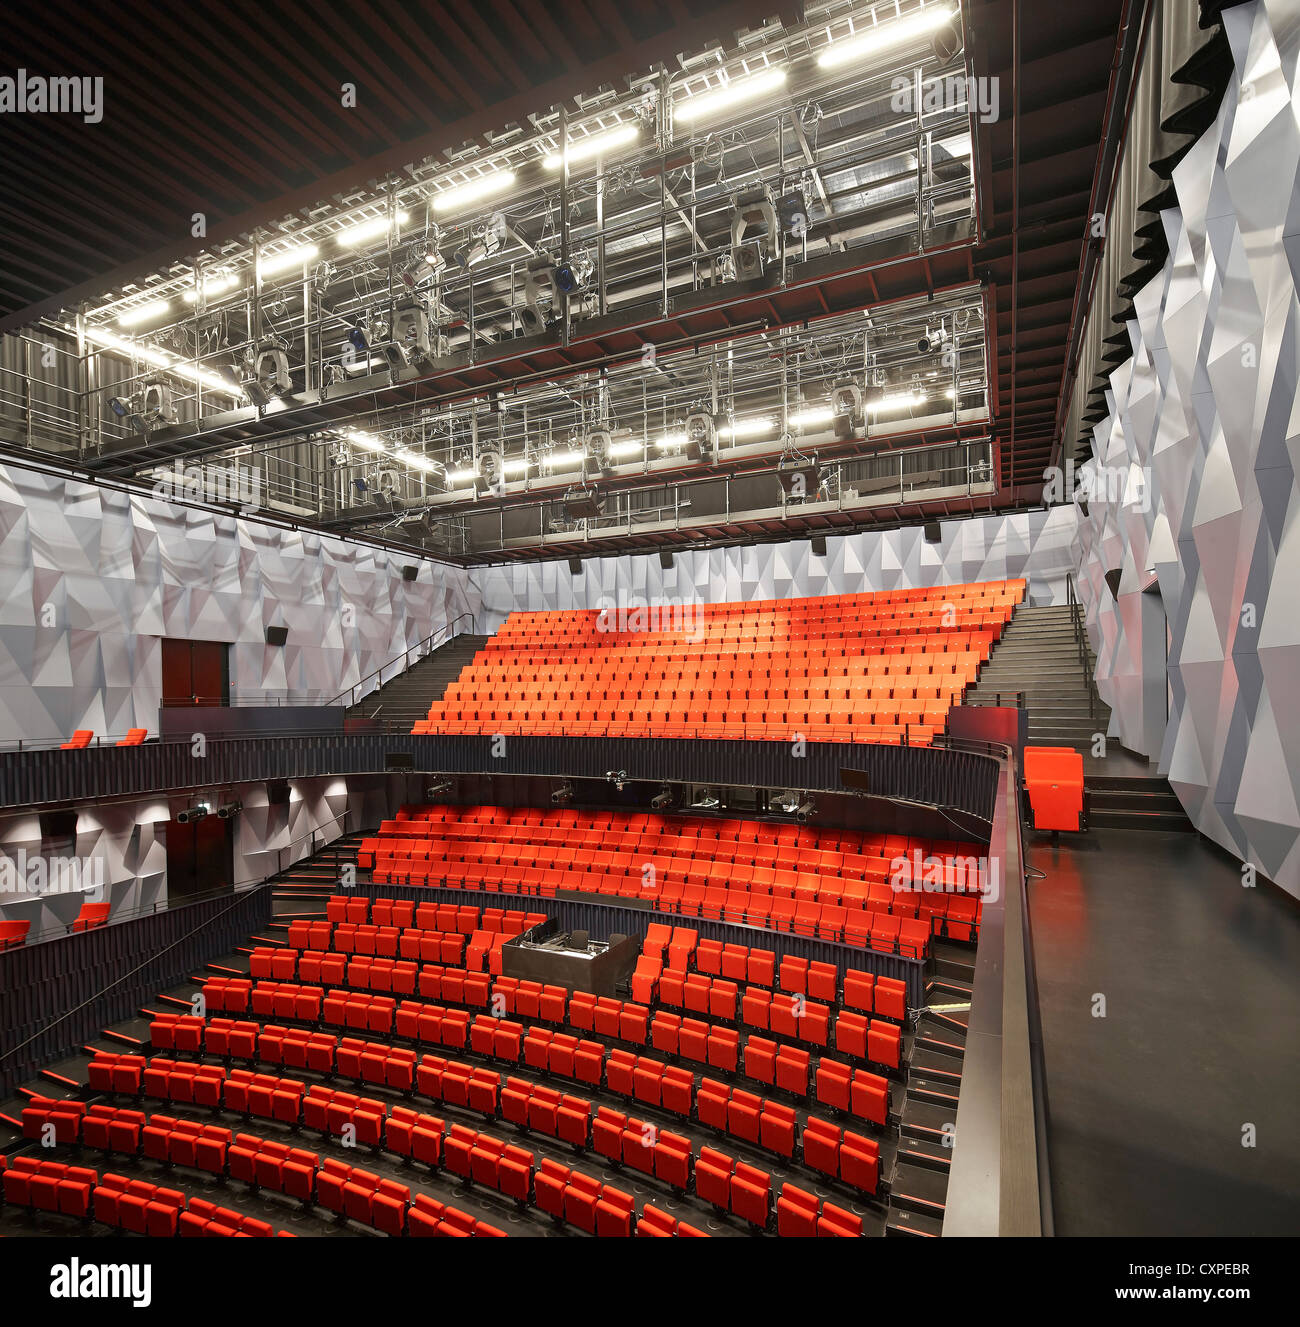 Kildee Performing Arts Center, Kristiansand, Noruega. Arquitecto: Ala de arquitectos, 2011. Foto de stock